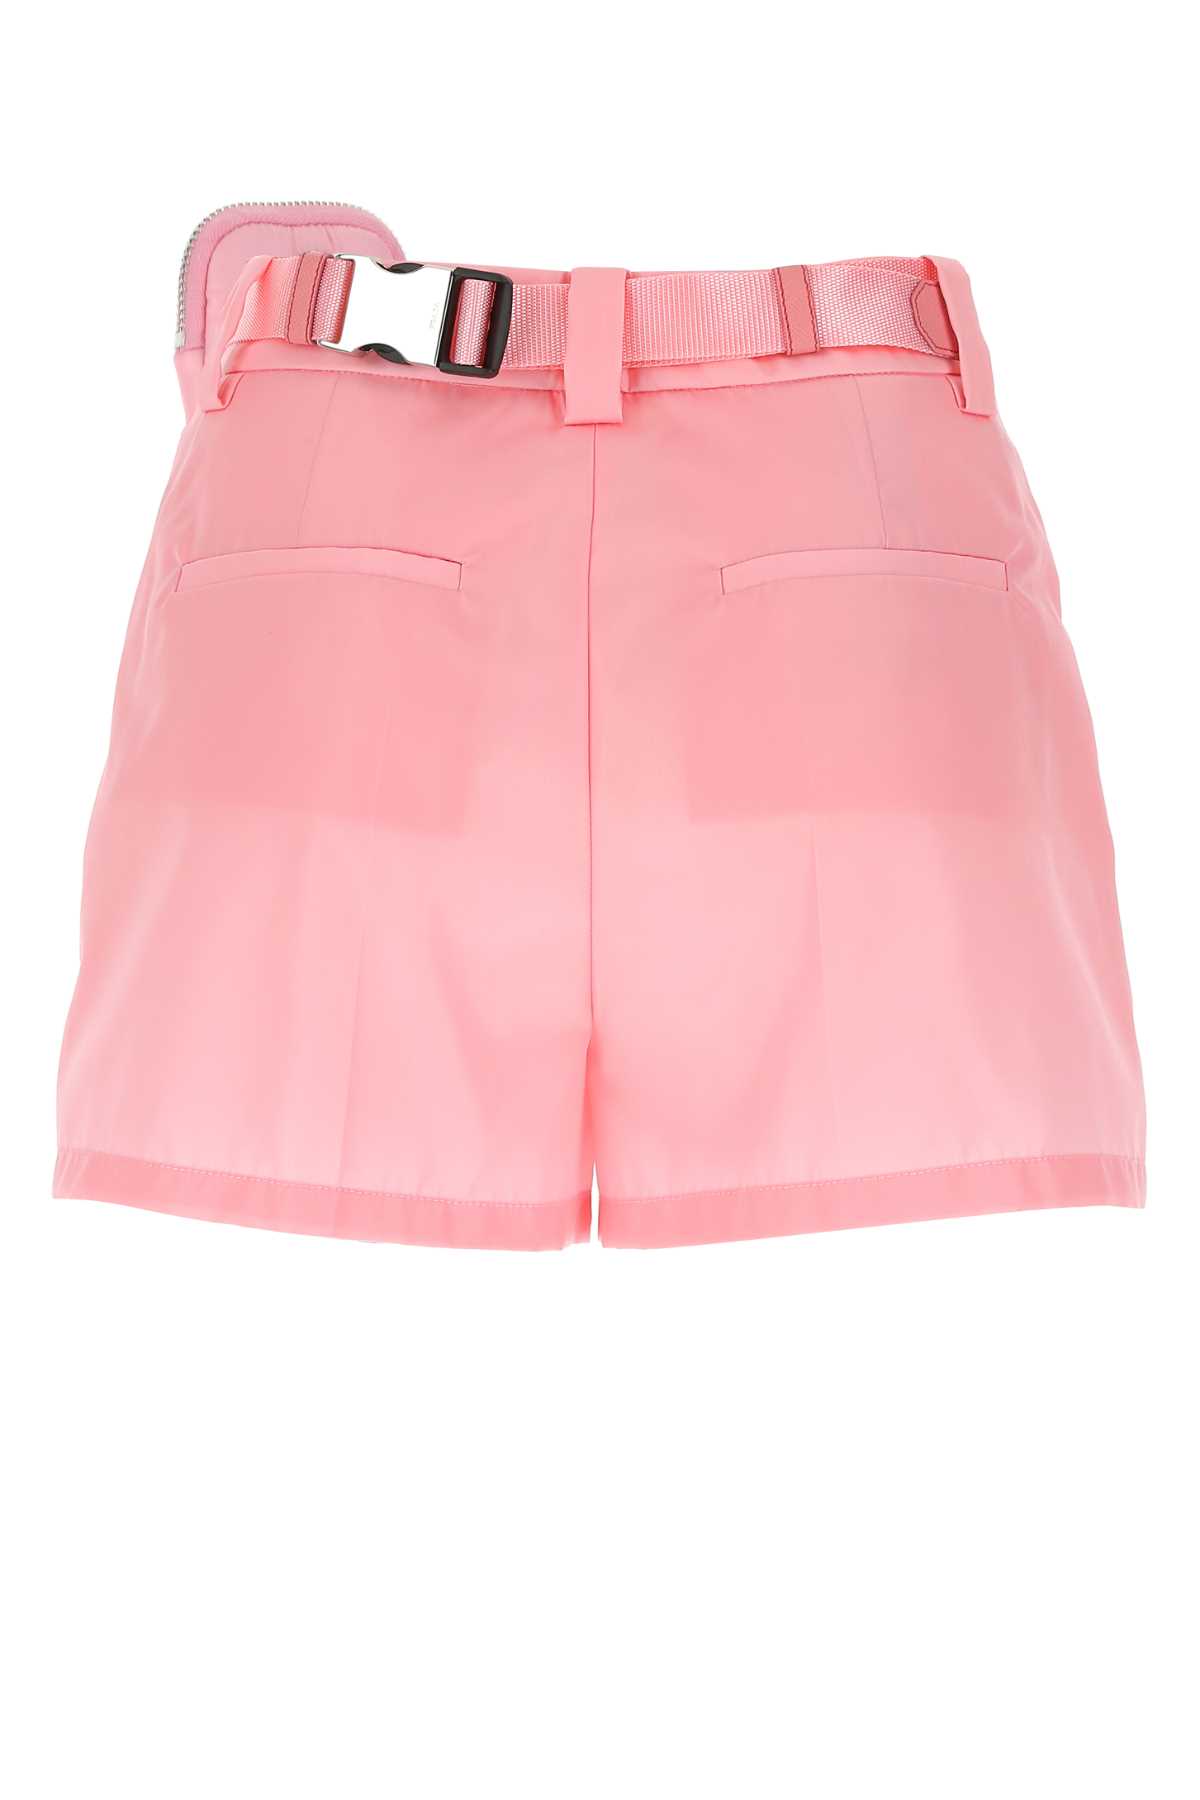 Prada Pink Nylon Shorts In F0028